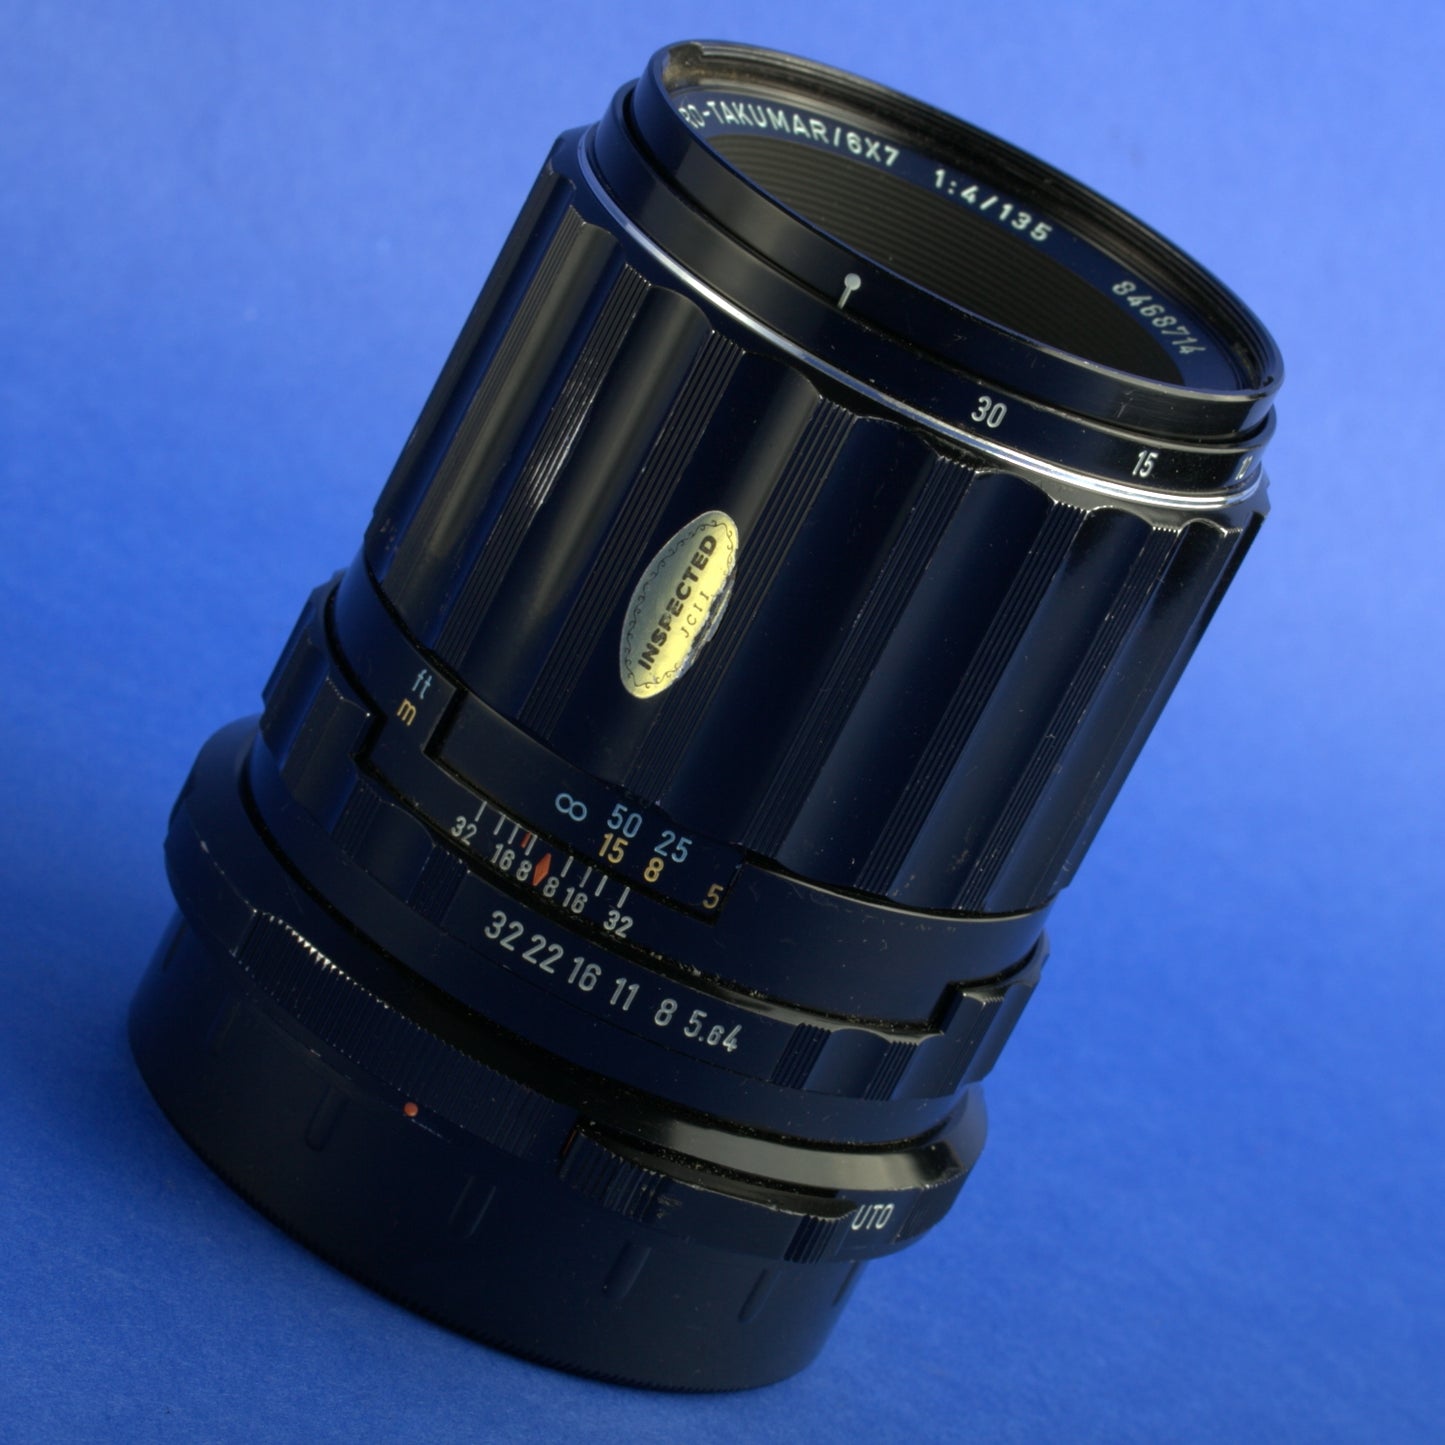 Pentax 6x7 Macro-Takumar 135mm F4 Super-Multi-Coated Lens Film Tested